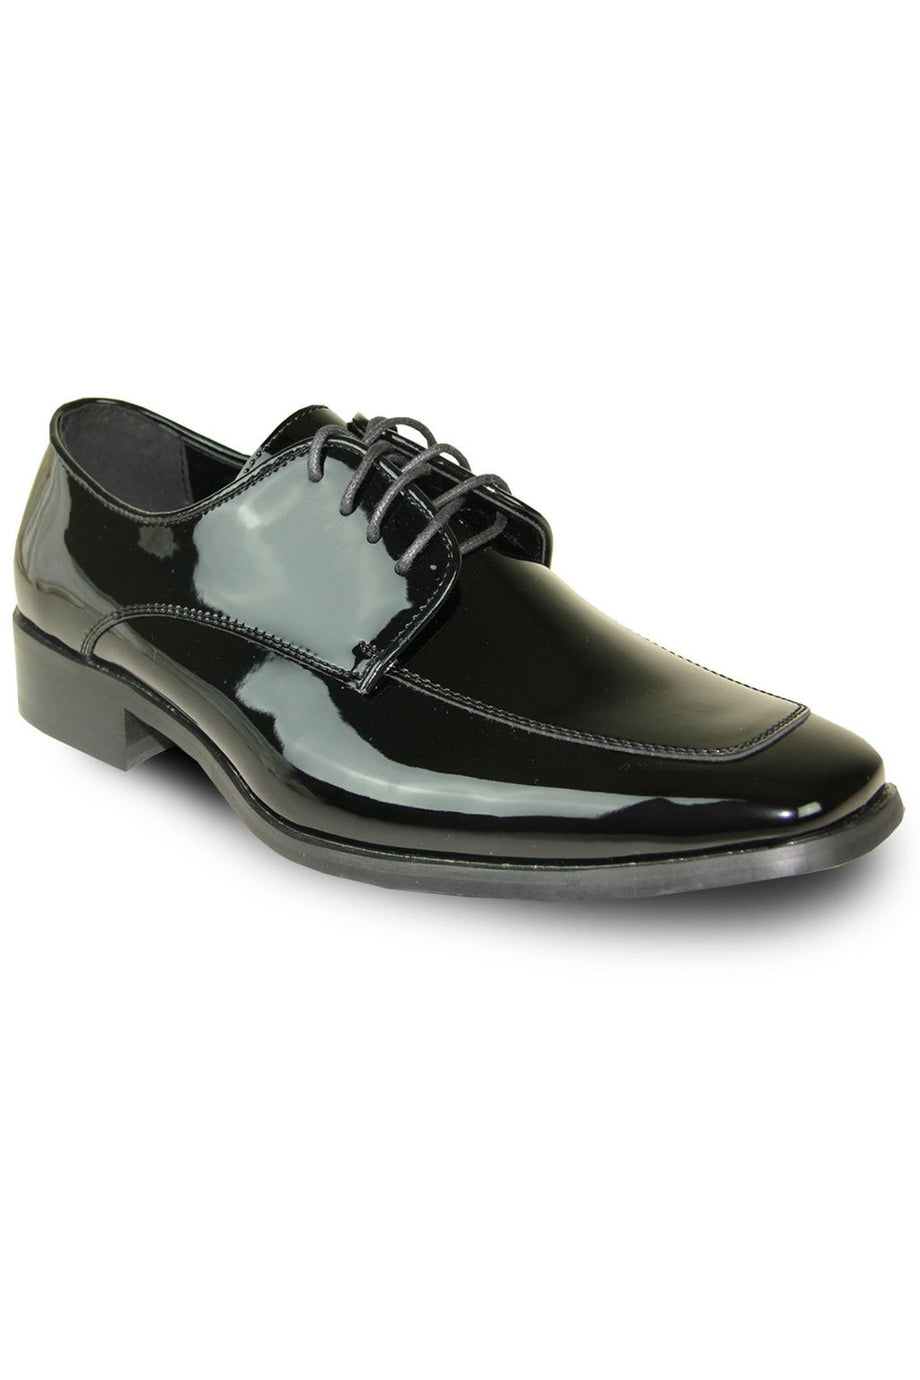 Vangelo "Vittorio" Black Vangelo Tuxedo Shoes